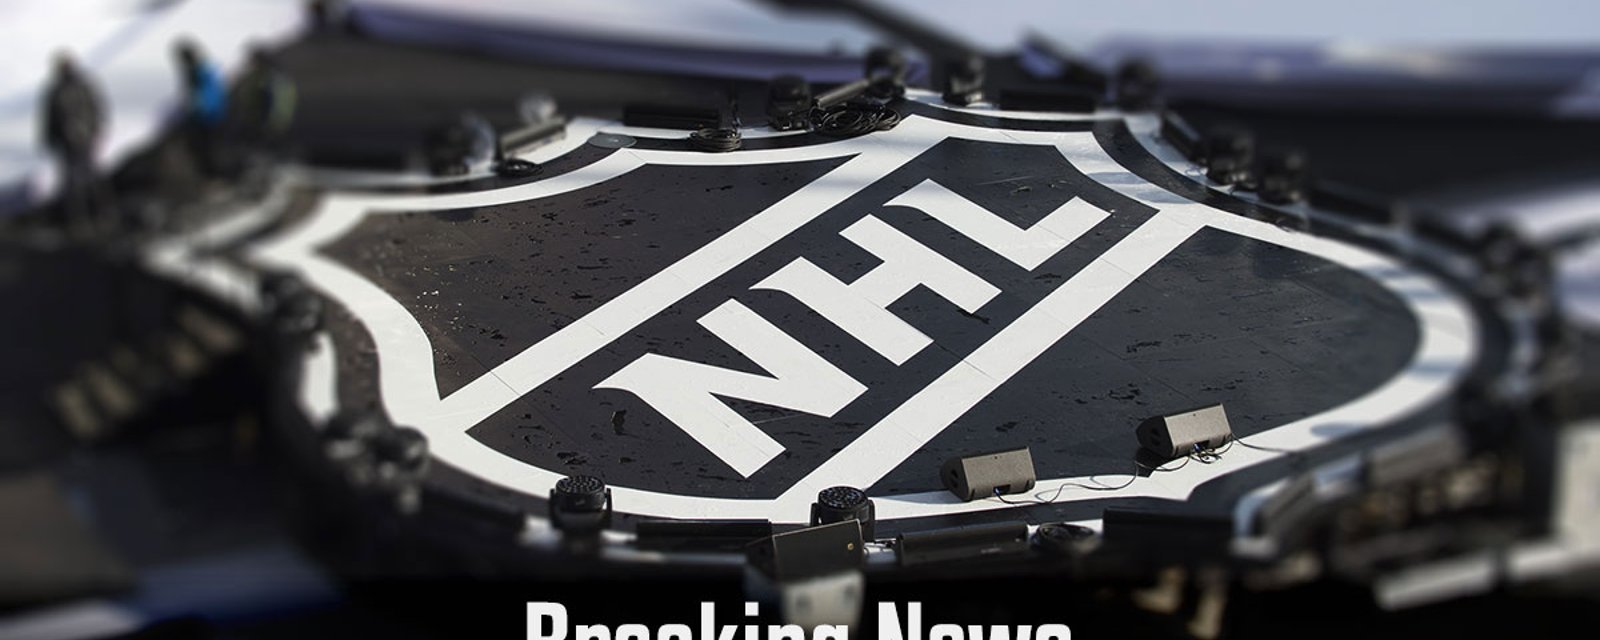 Breaking: NHL enforcer gets multi-game suspension for ugly hit last night.